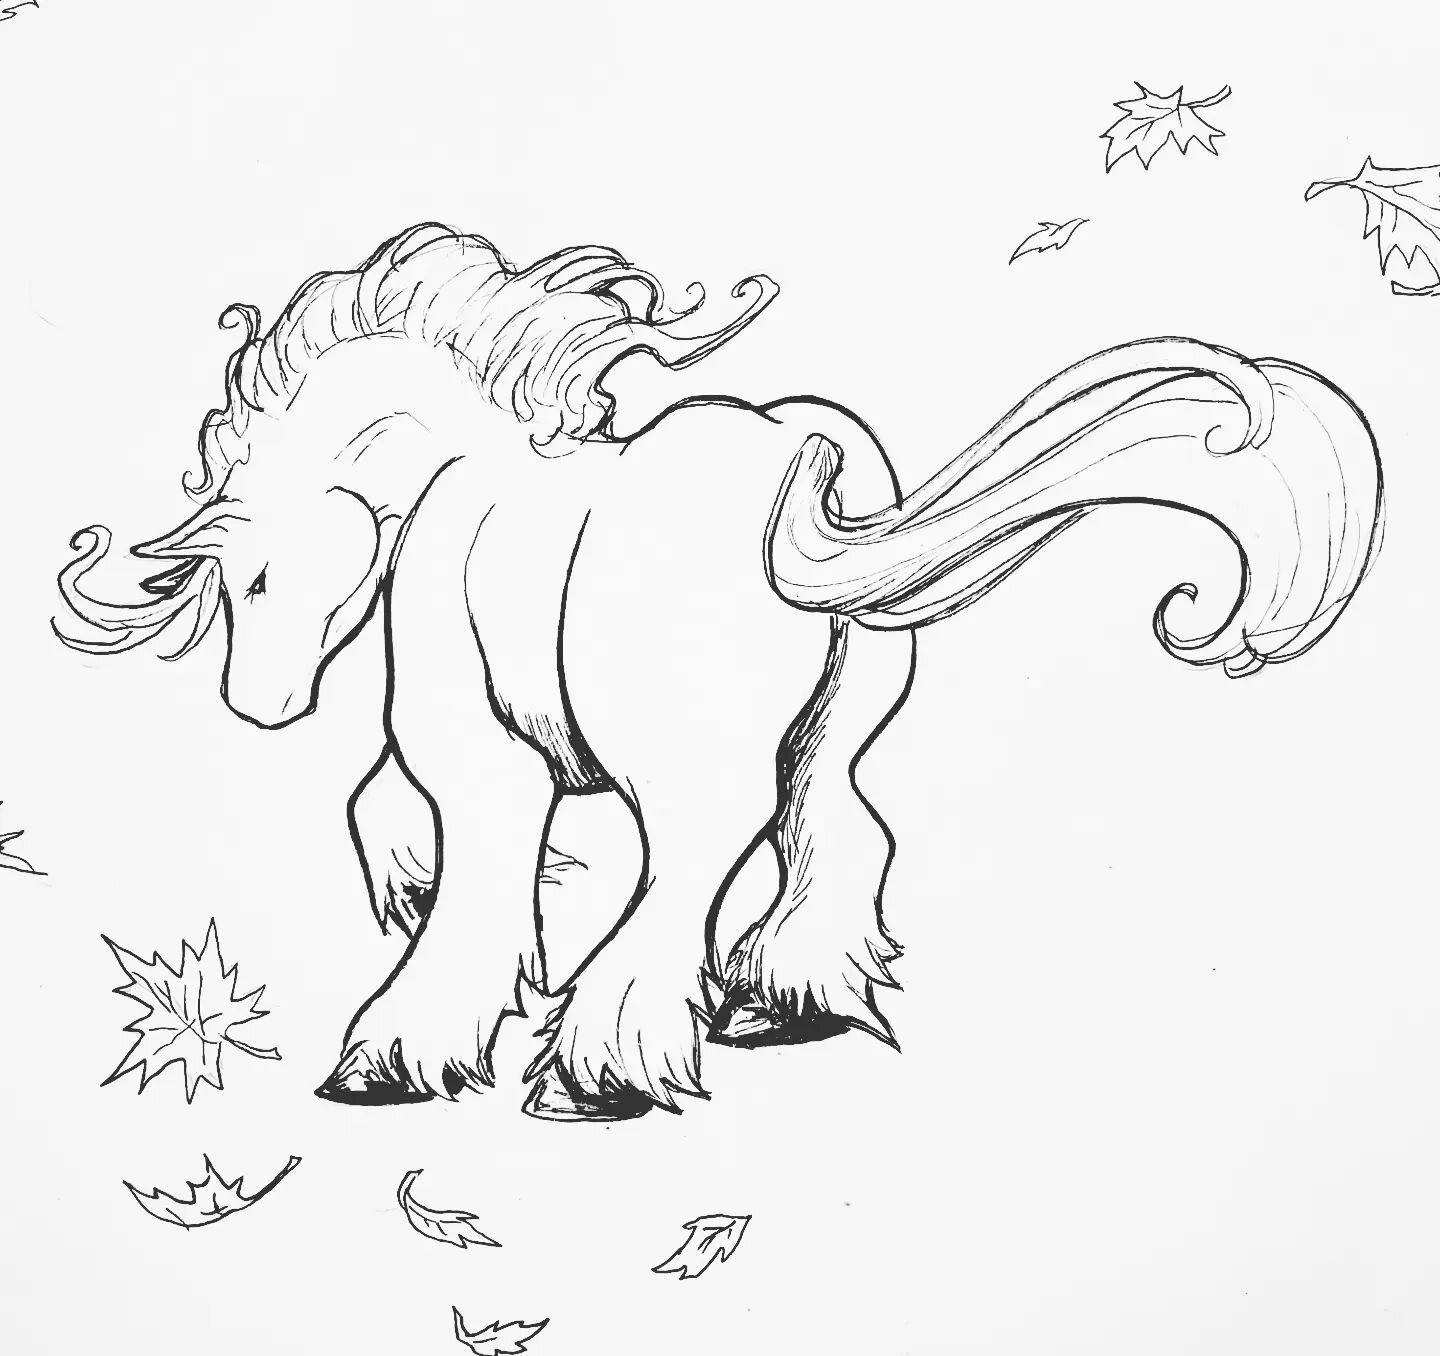 Trying to catch up on my inktober sketches! Day 19 - Ponytail 

#inktober #inktober2022 #inktoberponytail #inks #pony #Ponytail #penandink #inking #inkeveryday